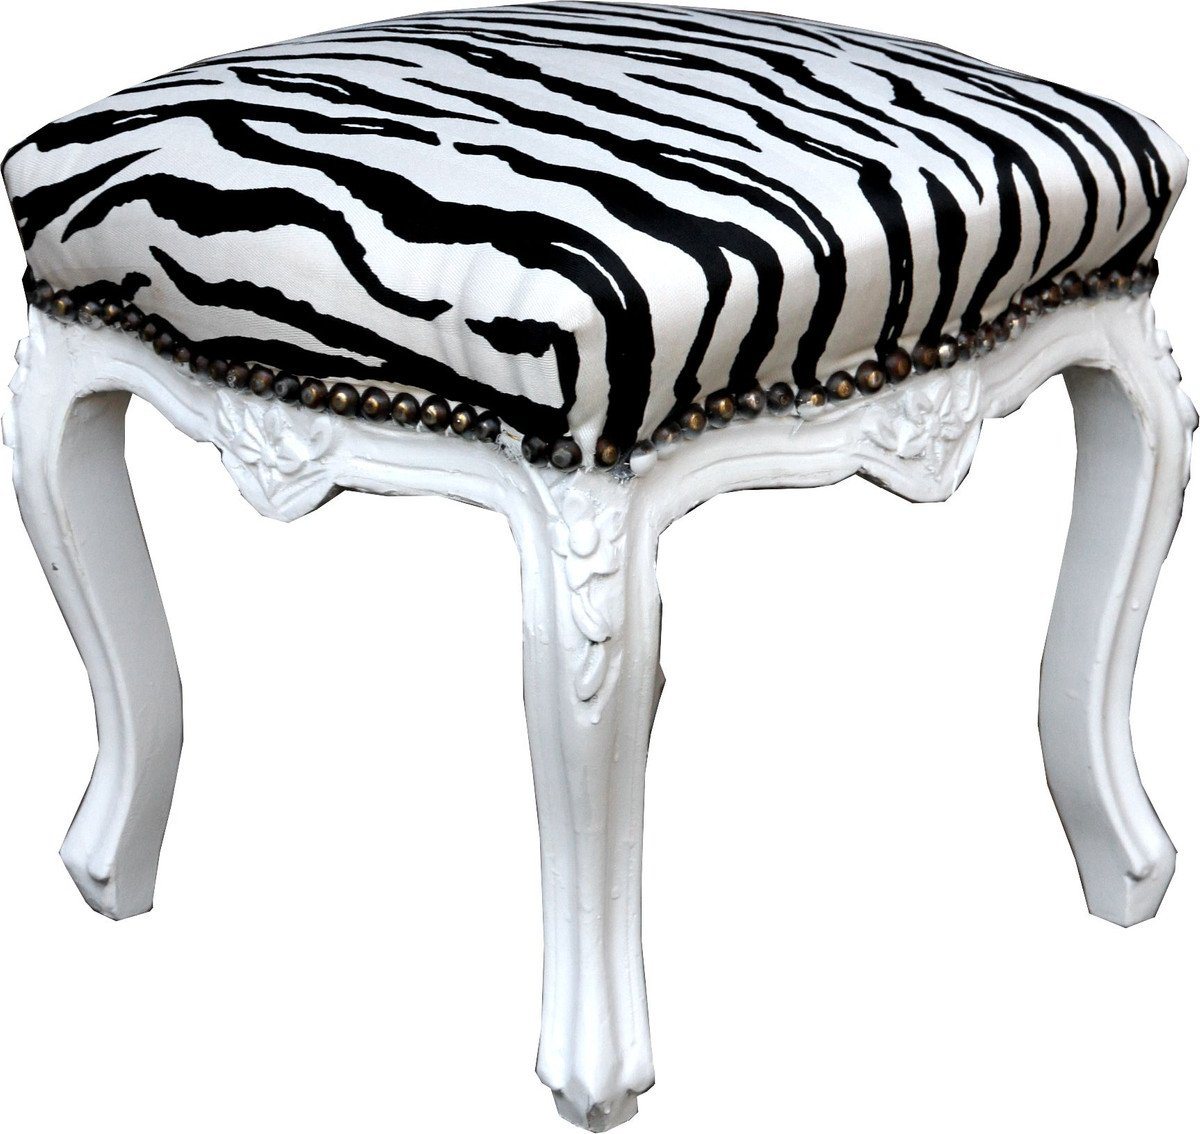 Casa Padrino Fußhocker Barock Fußhocker Zebra / Weiß - Antik Stil Möbel - Hocker von Casa Padrino